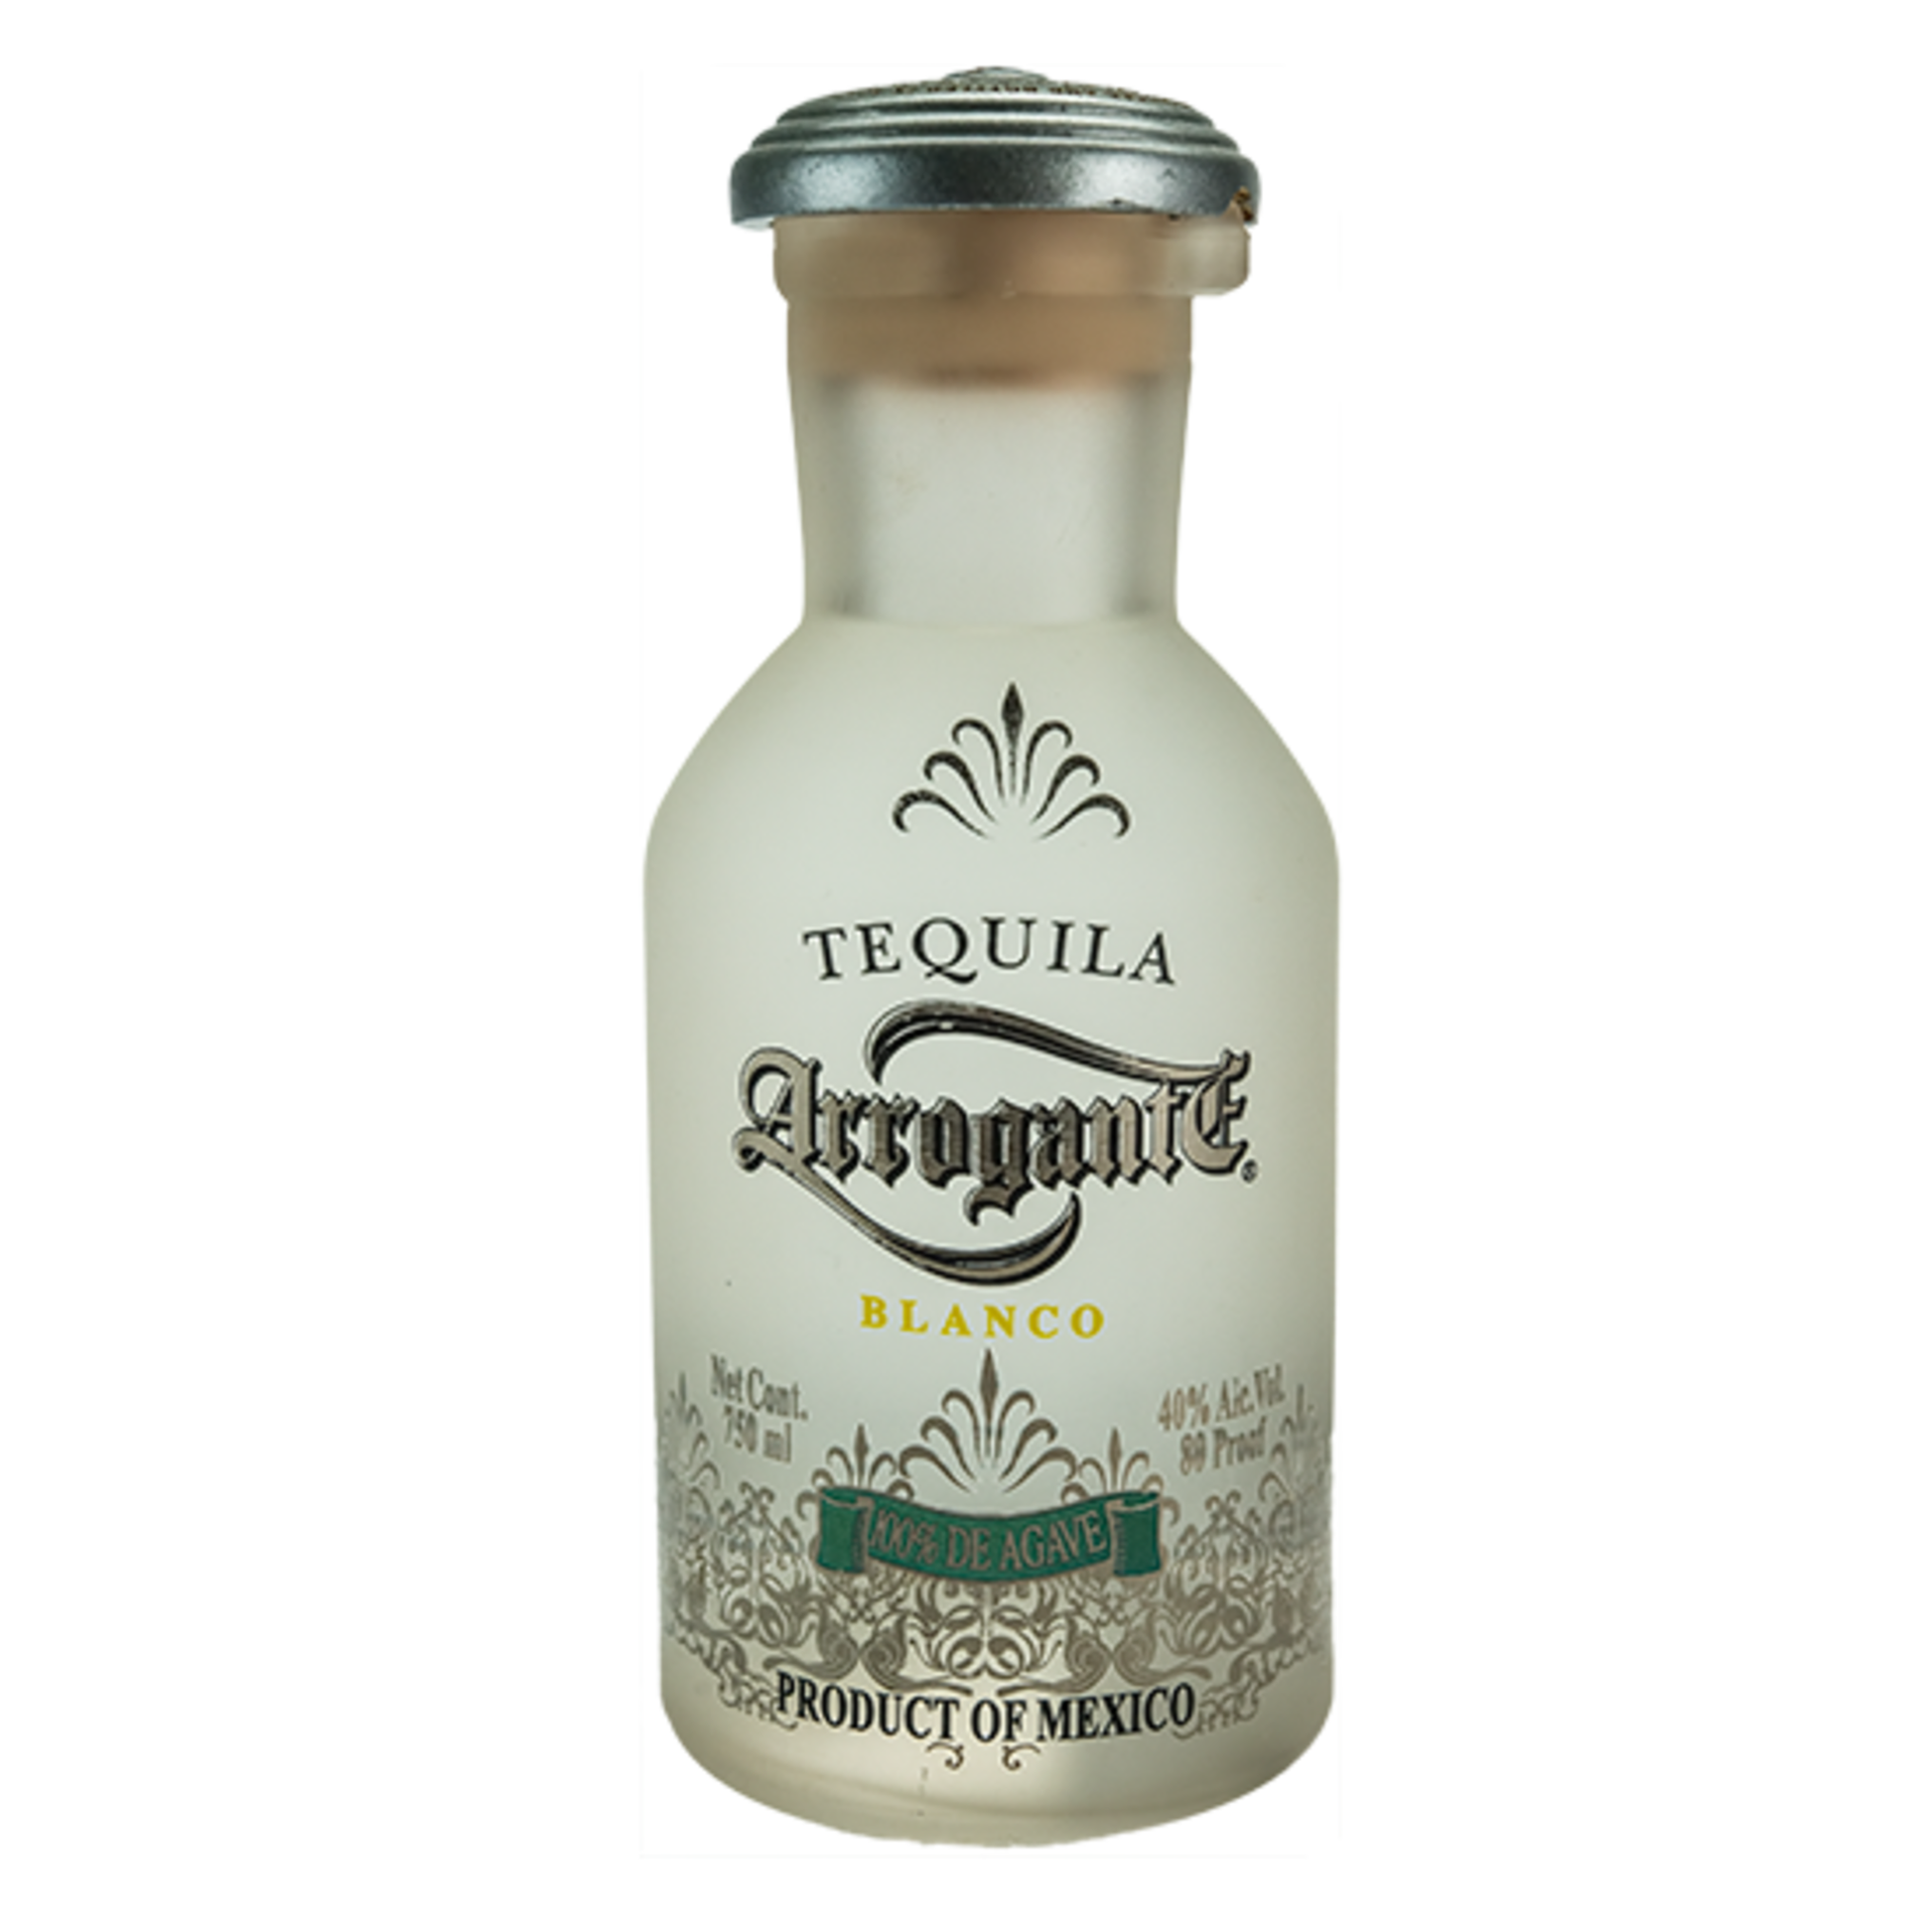 Arrogante Blanco Tequila - Liquor Geeks